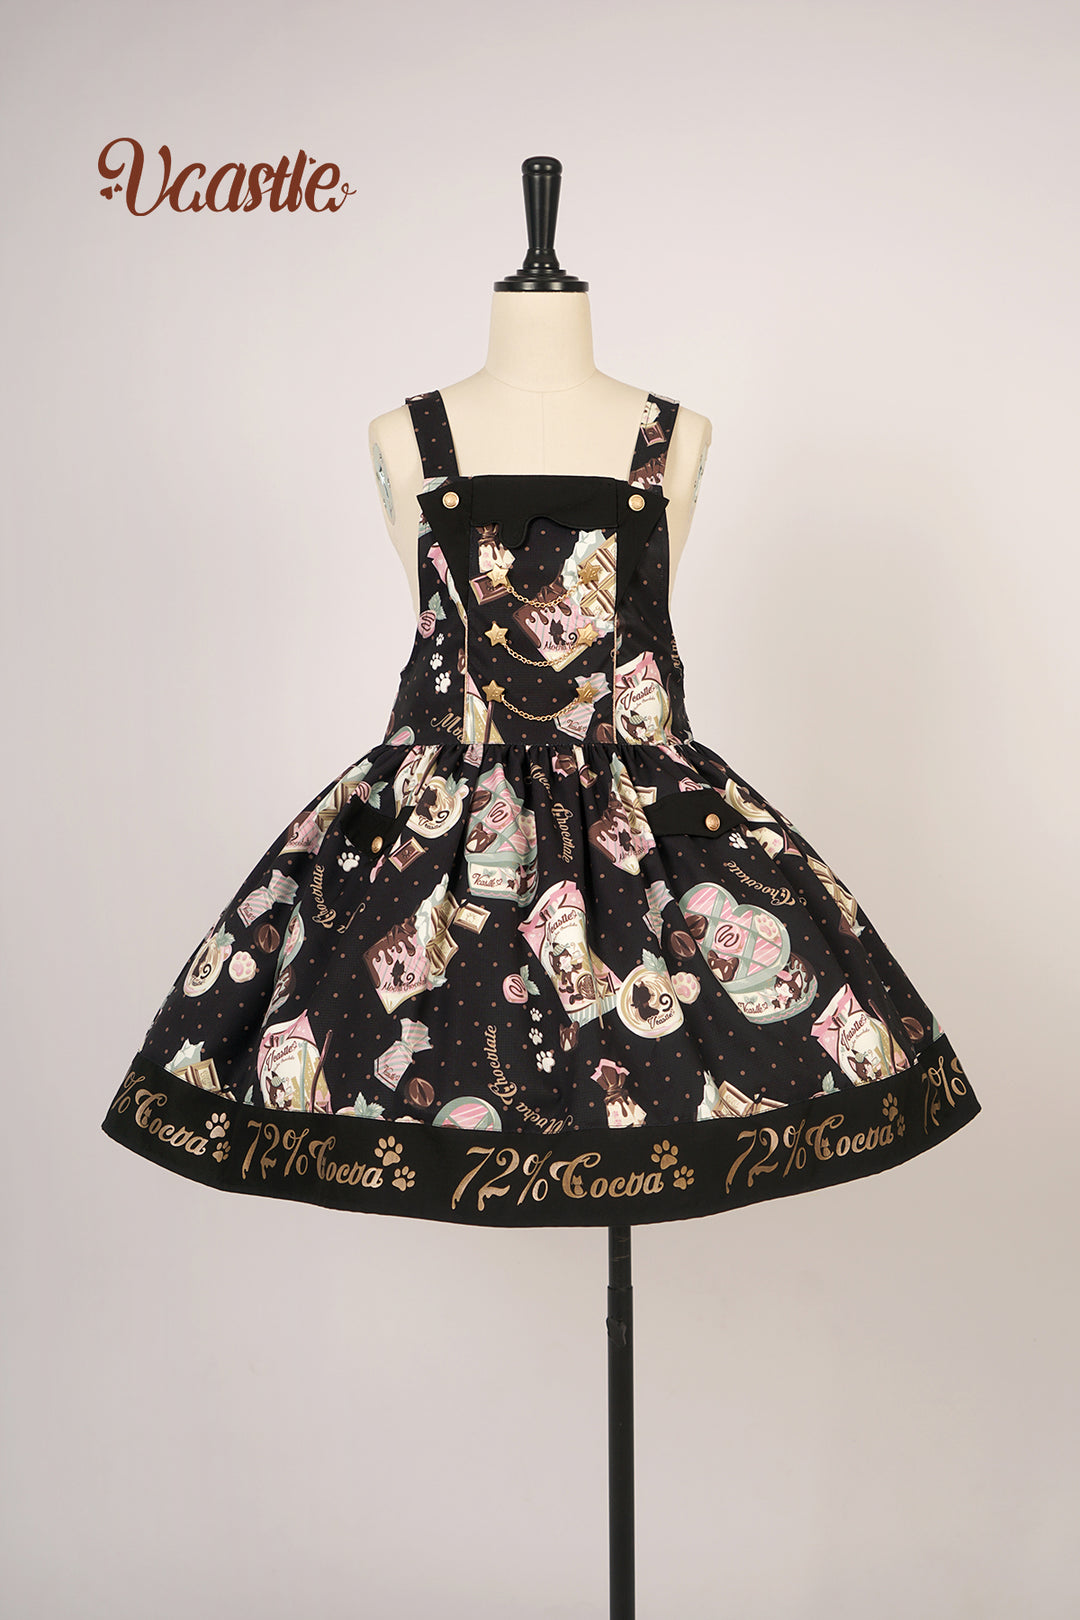 Vcastle~Mocha Choc~Kawaii Lolita Slopette Dress Suit Multicolors S black suspender skirt 